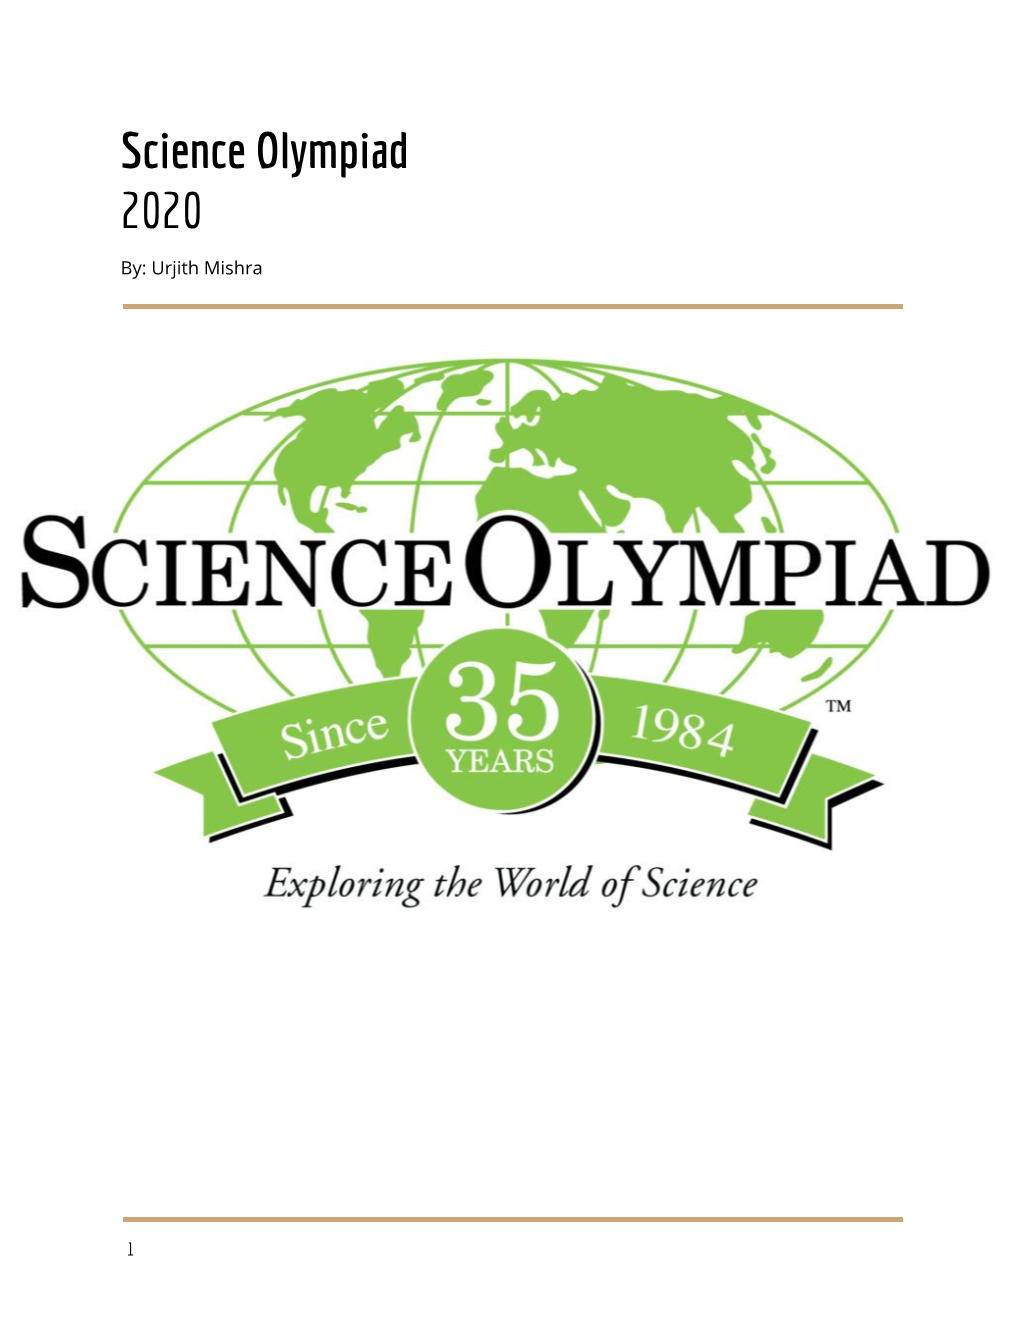 Science Olympiad 2020